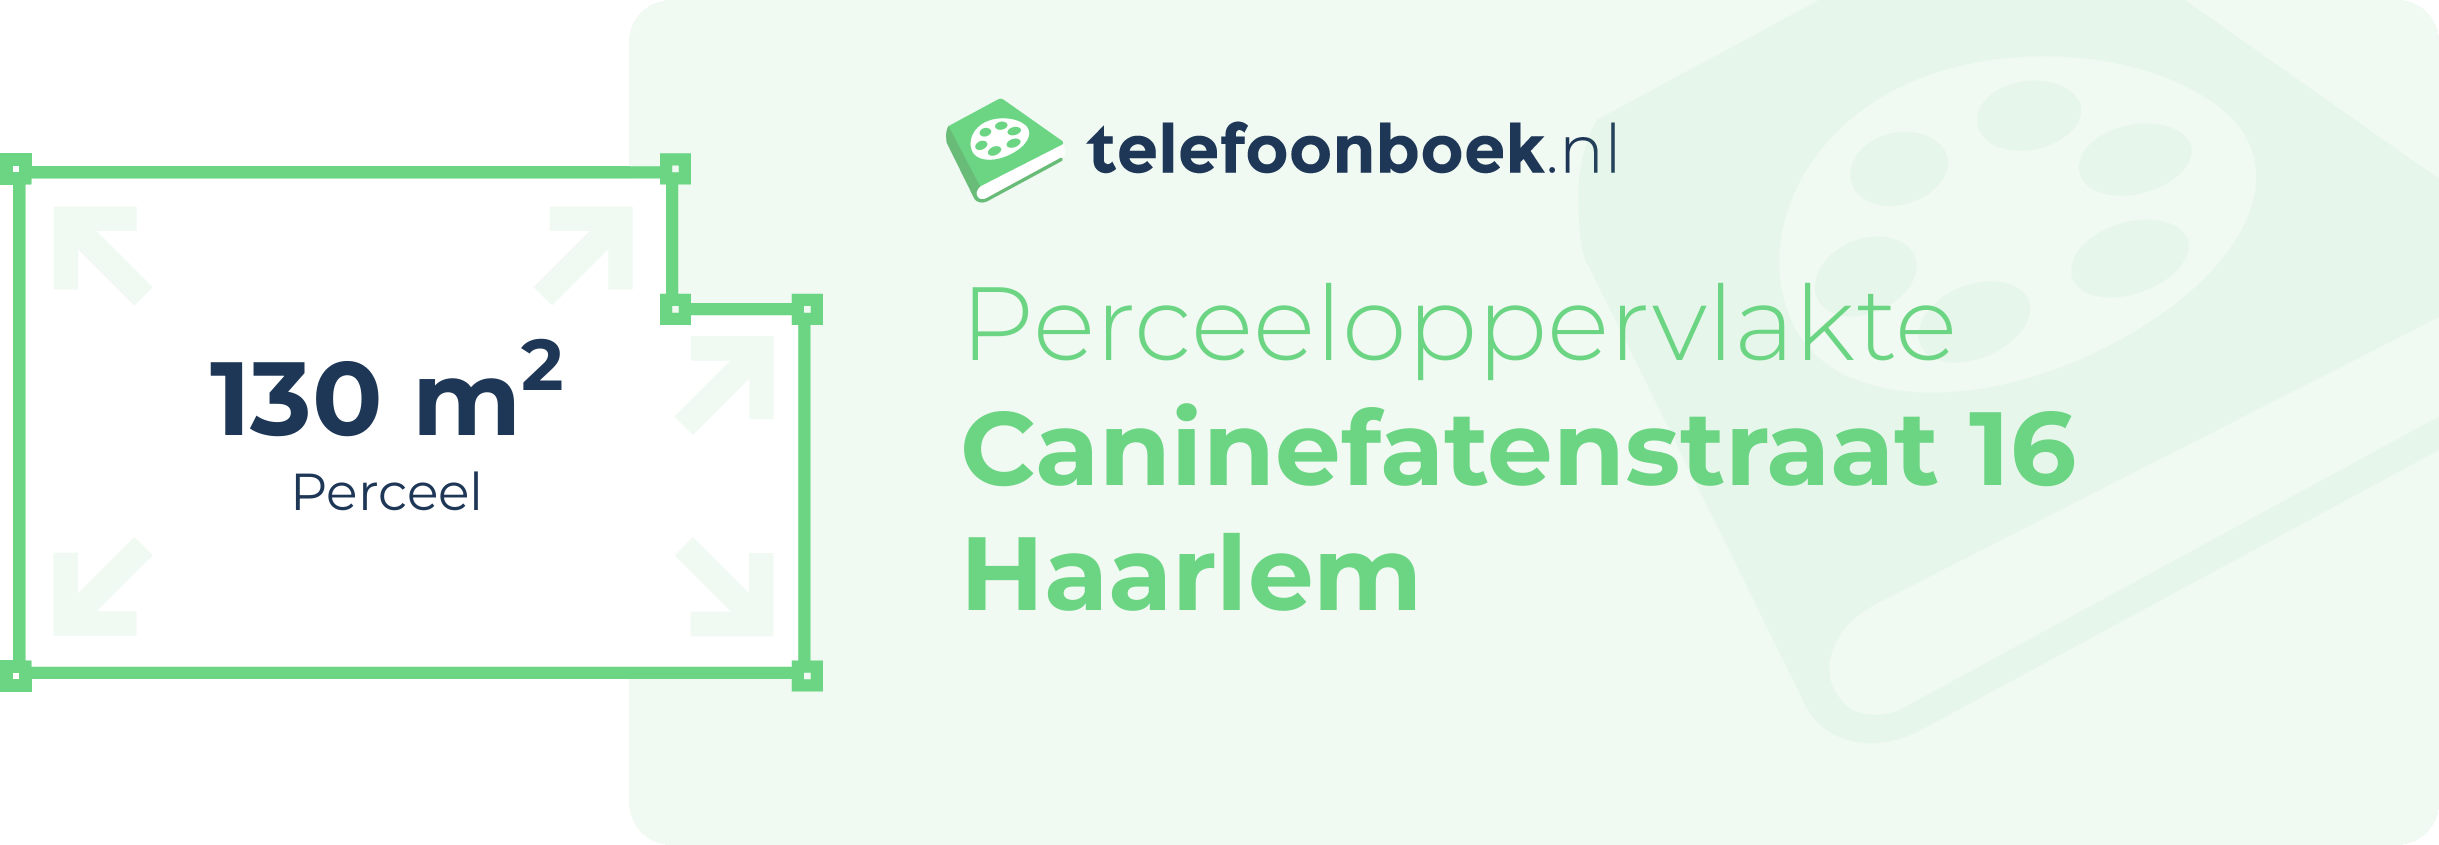 Perceeloppervlakte Caninefatenstraat 16 Haarlem